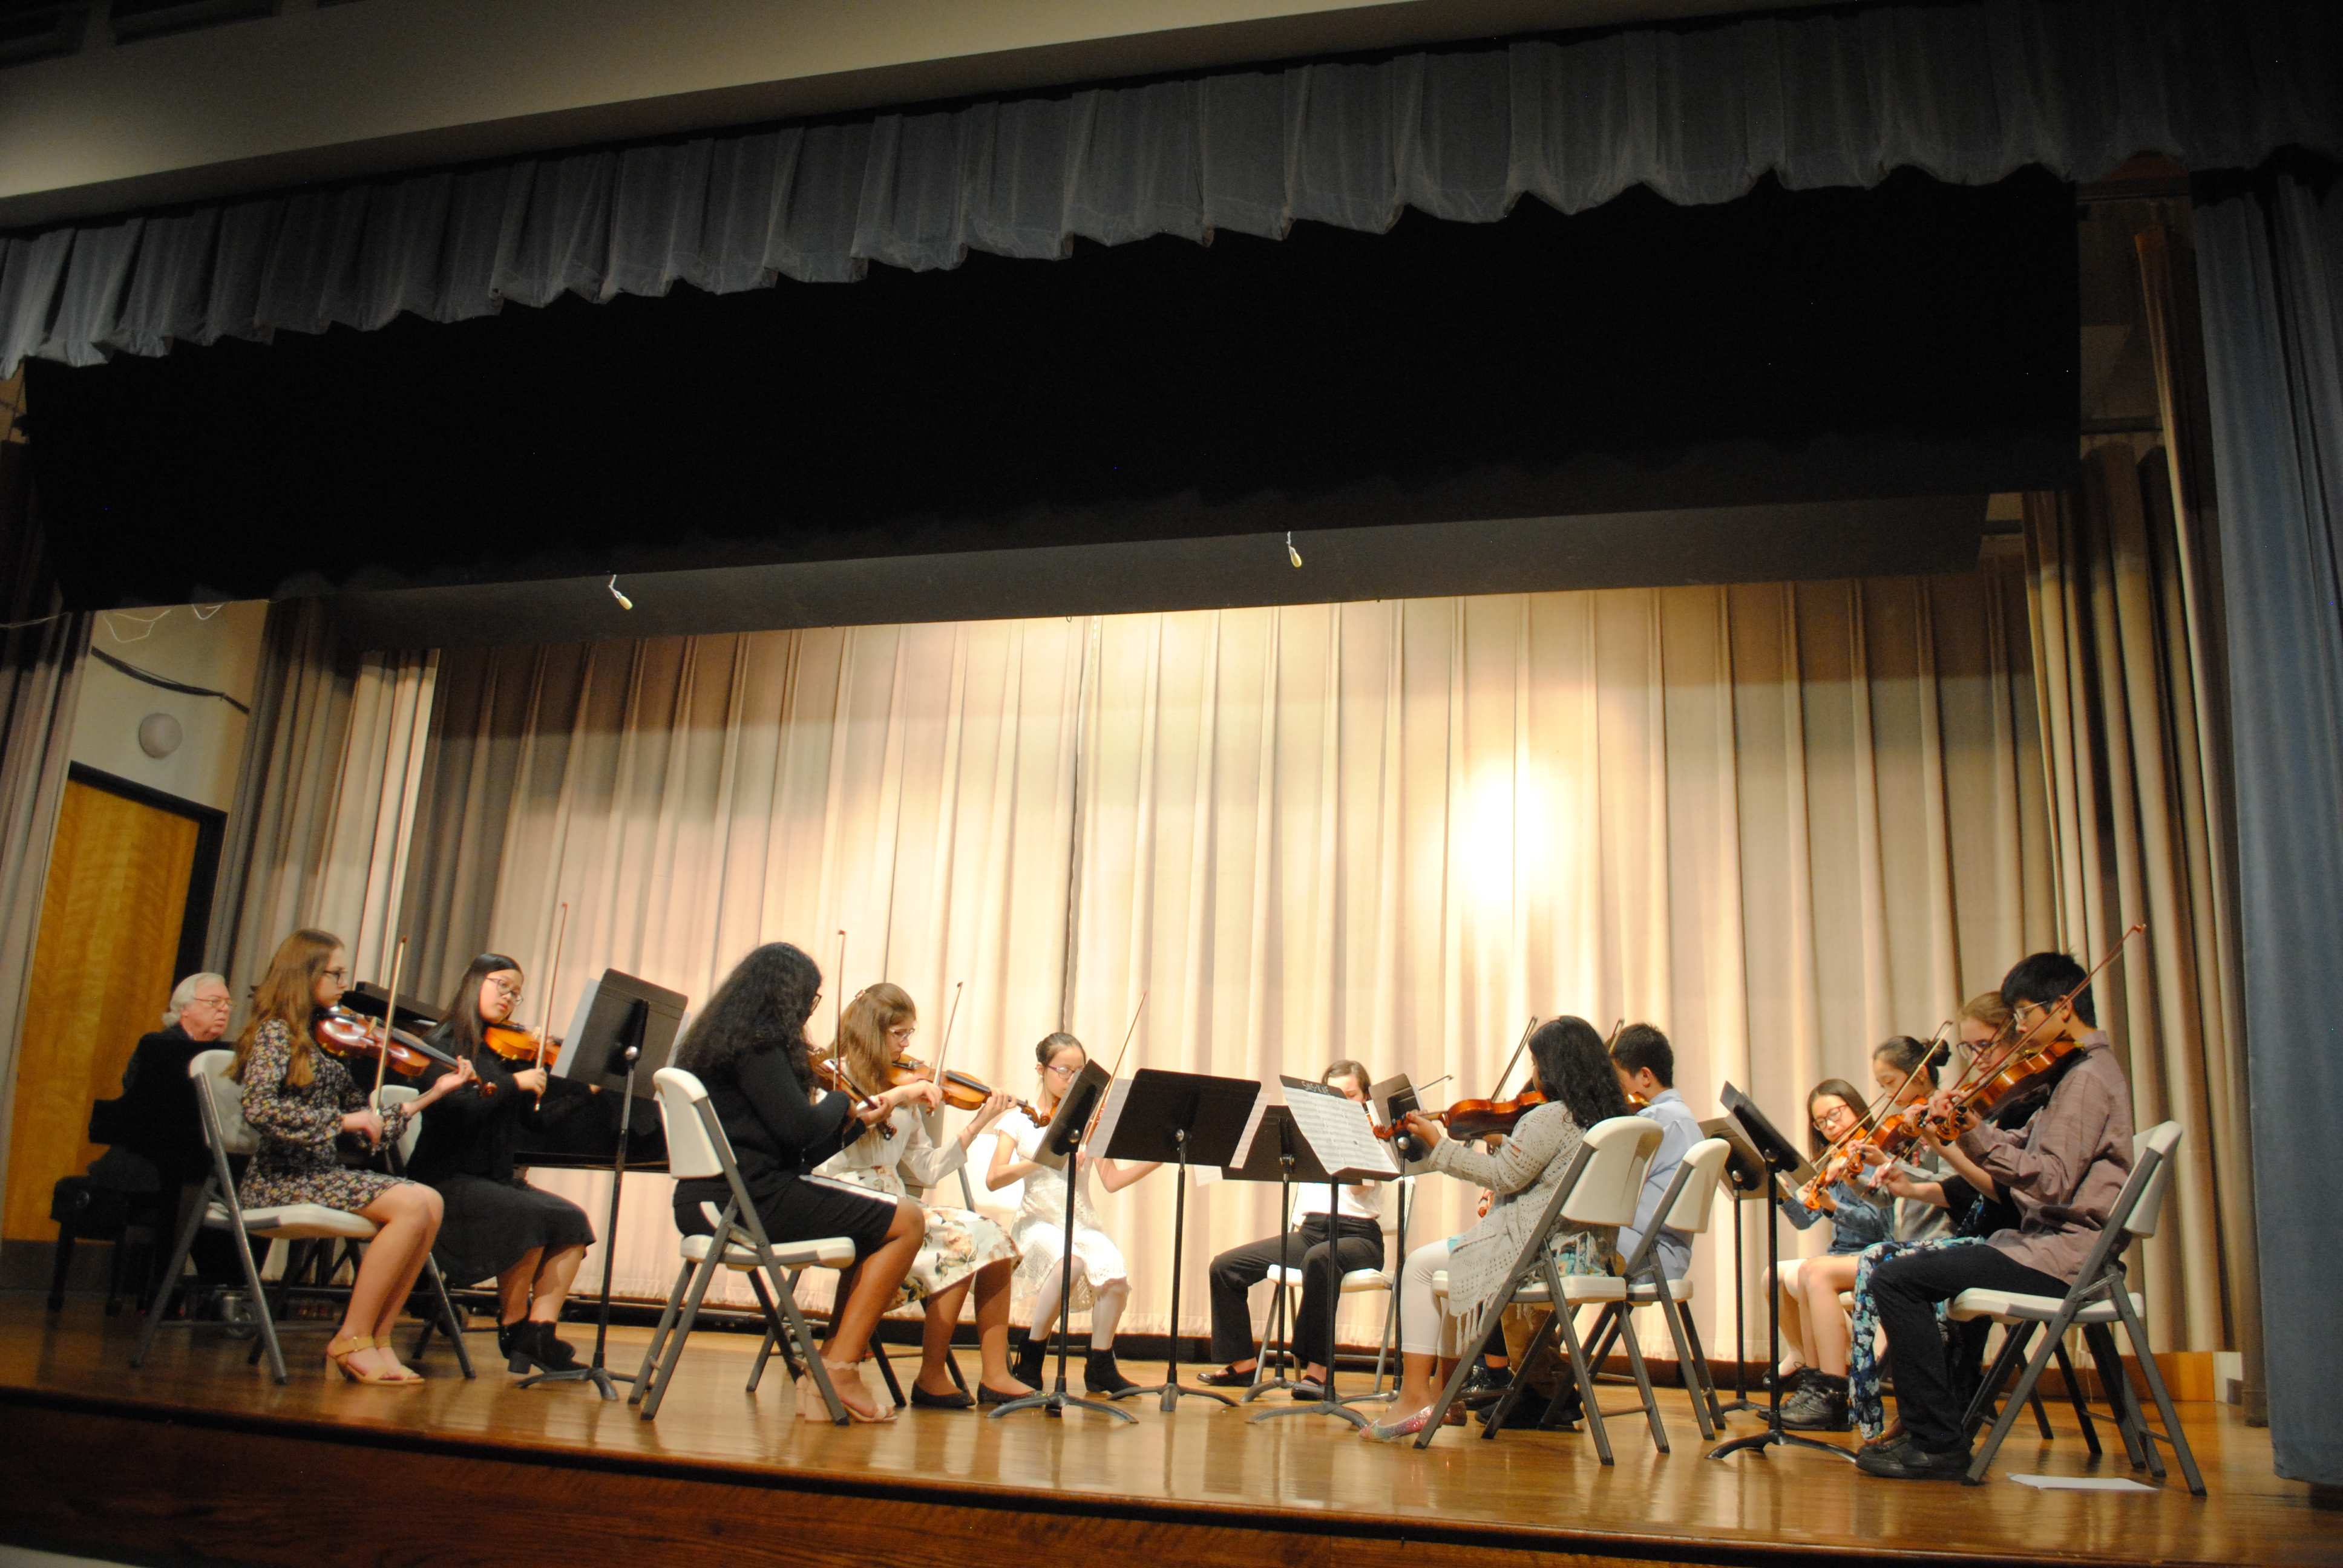 Settlement Music School students perform at the Kardon-Northeast Branch